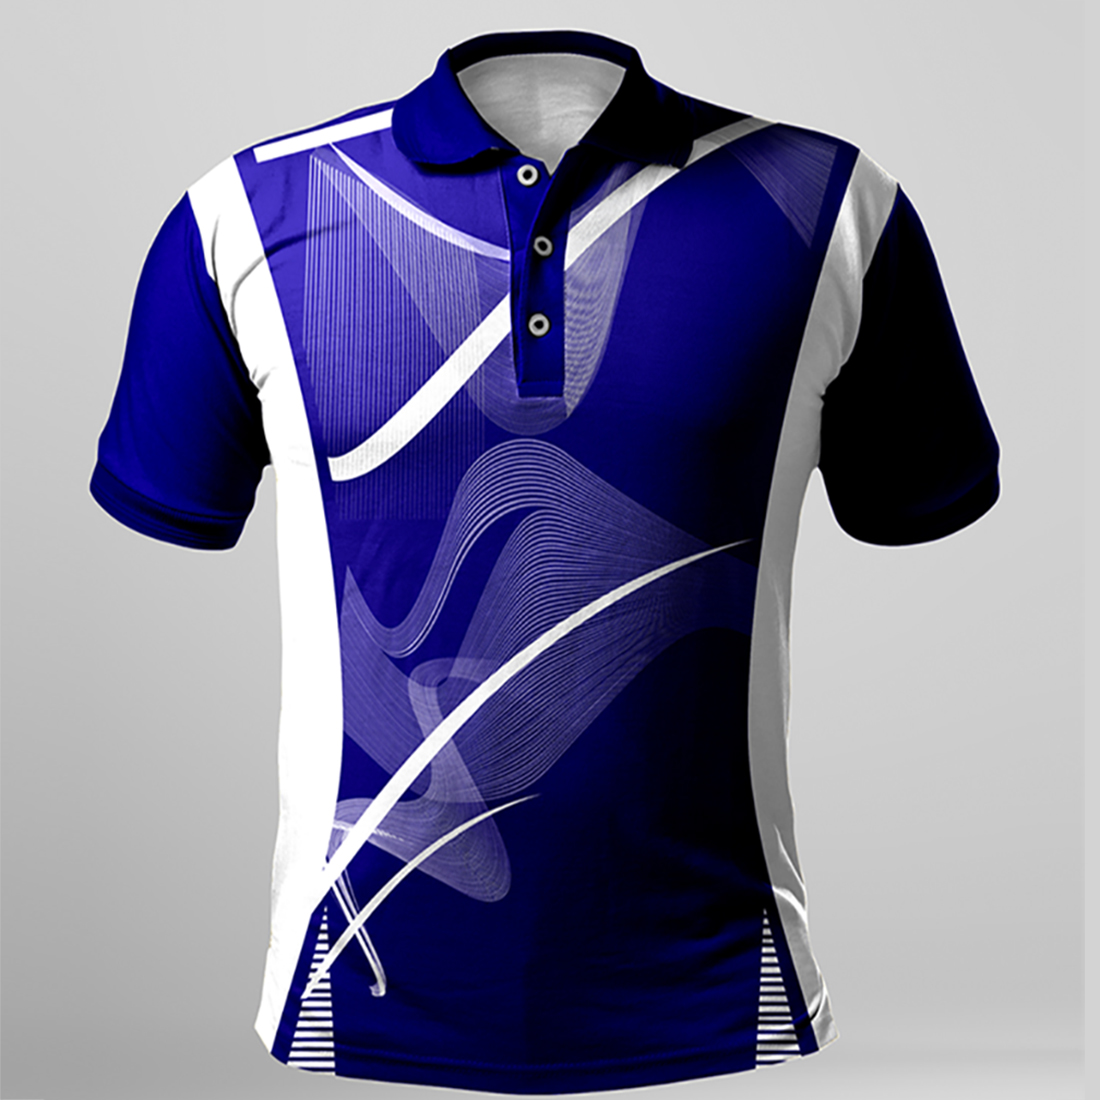 Jersey Design, Sports Wear Design - MasterBundles